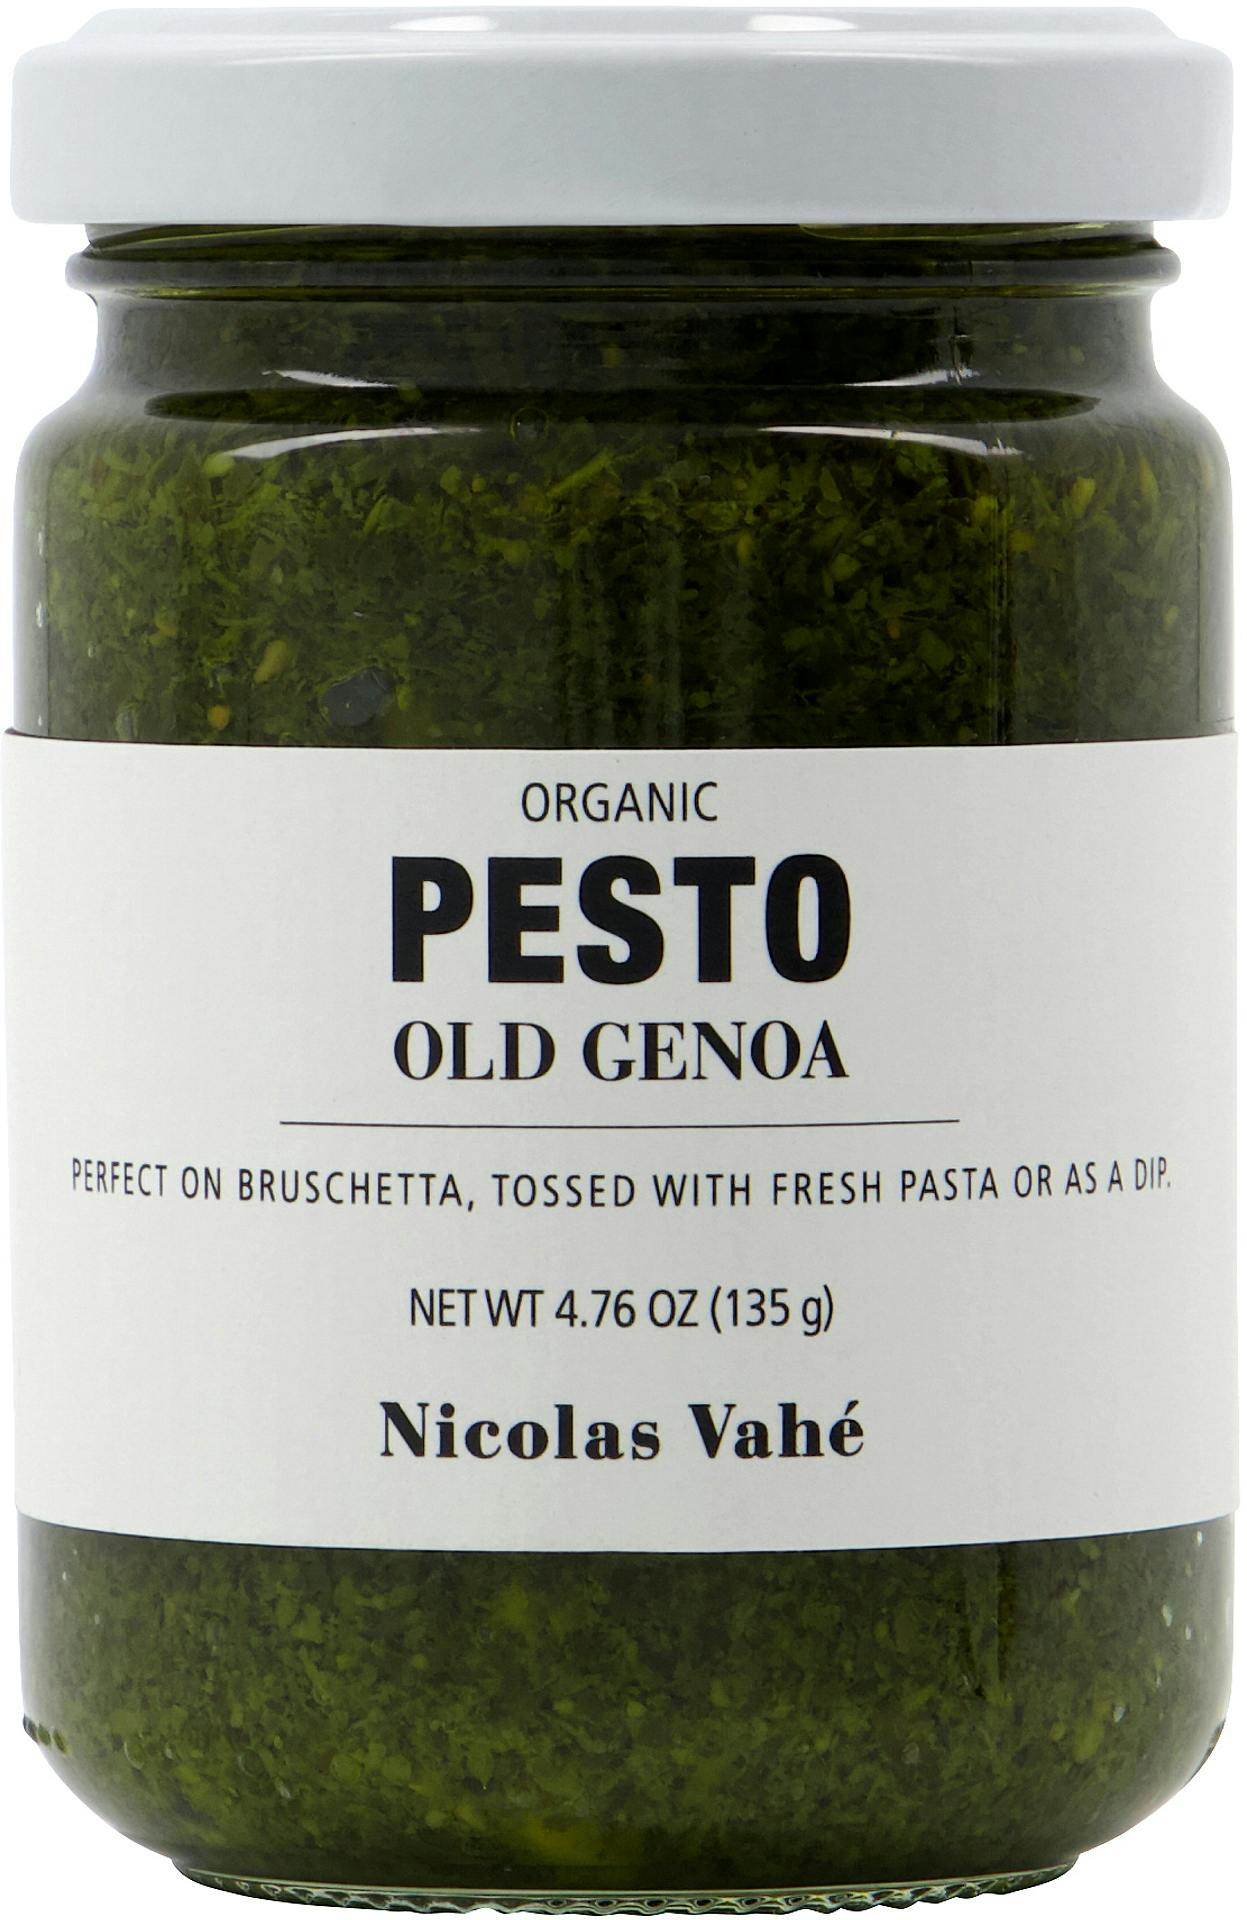 Nicolas Vahé Pesto Old Genoa